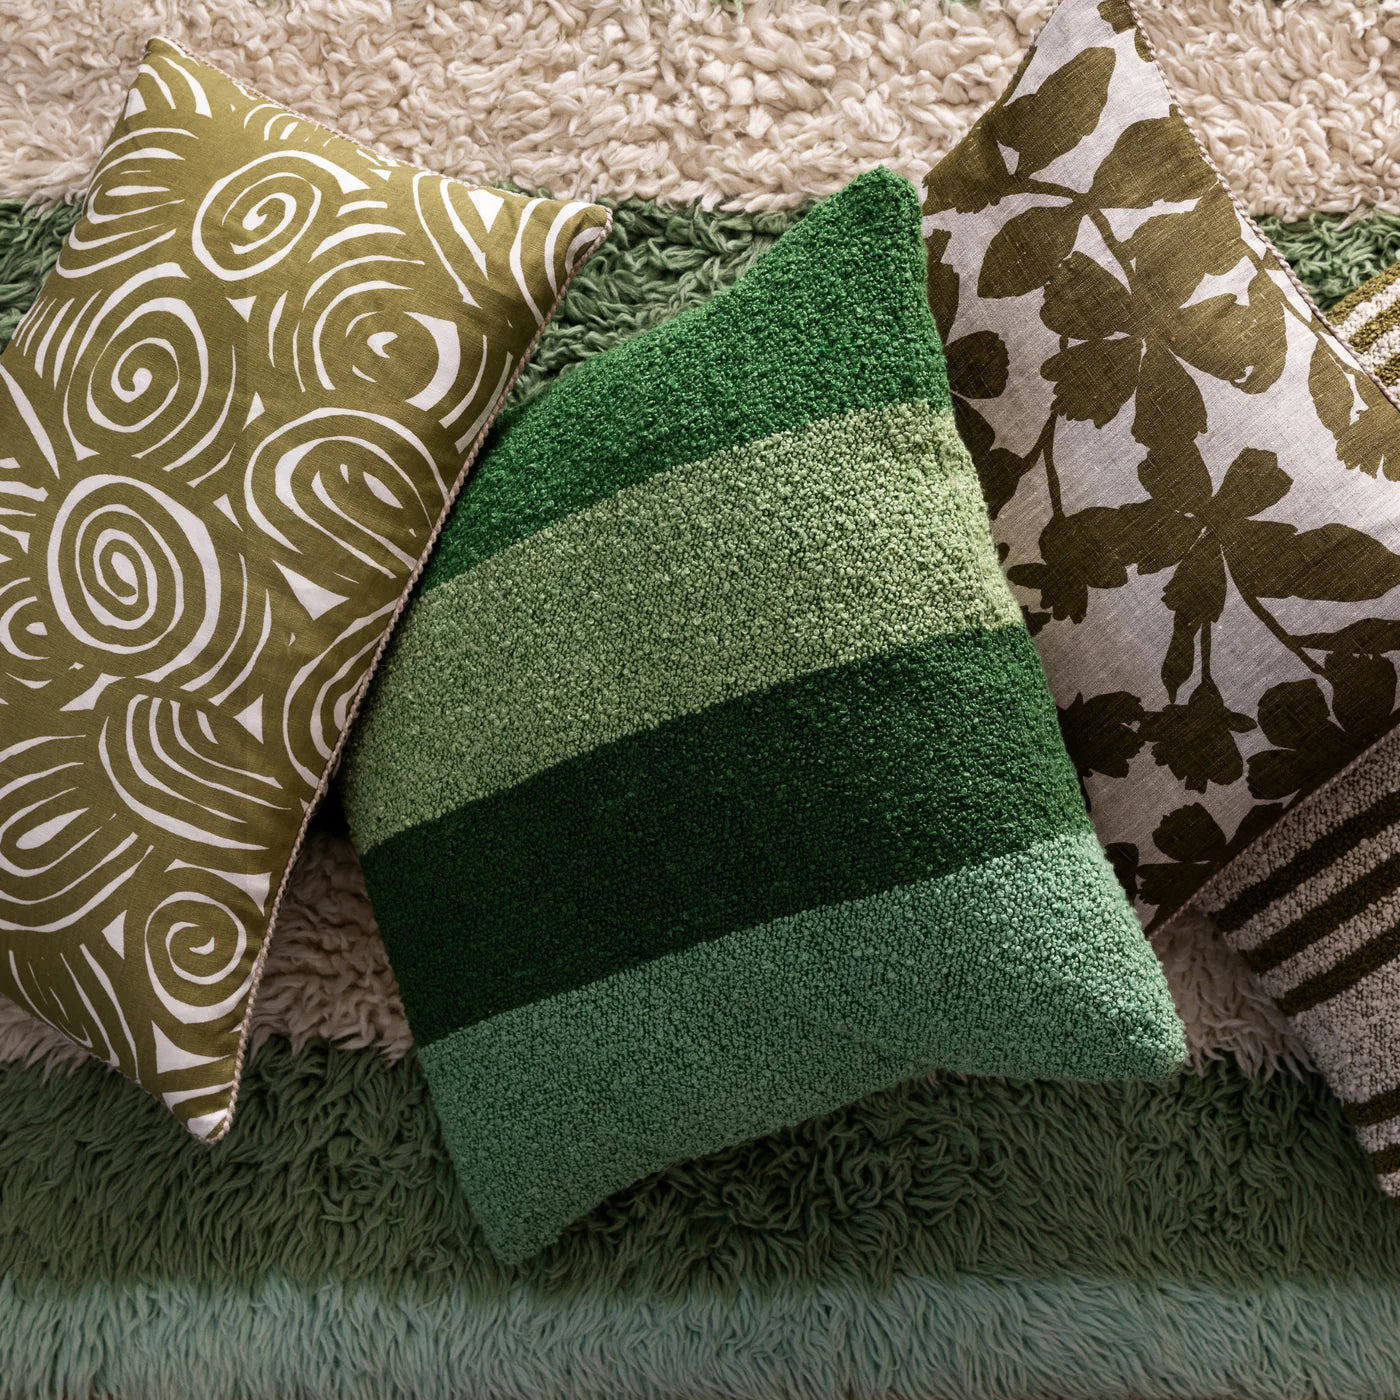 Boucle Wide Stripe Cushion Green - 60cm